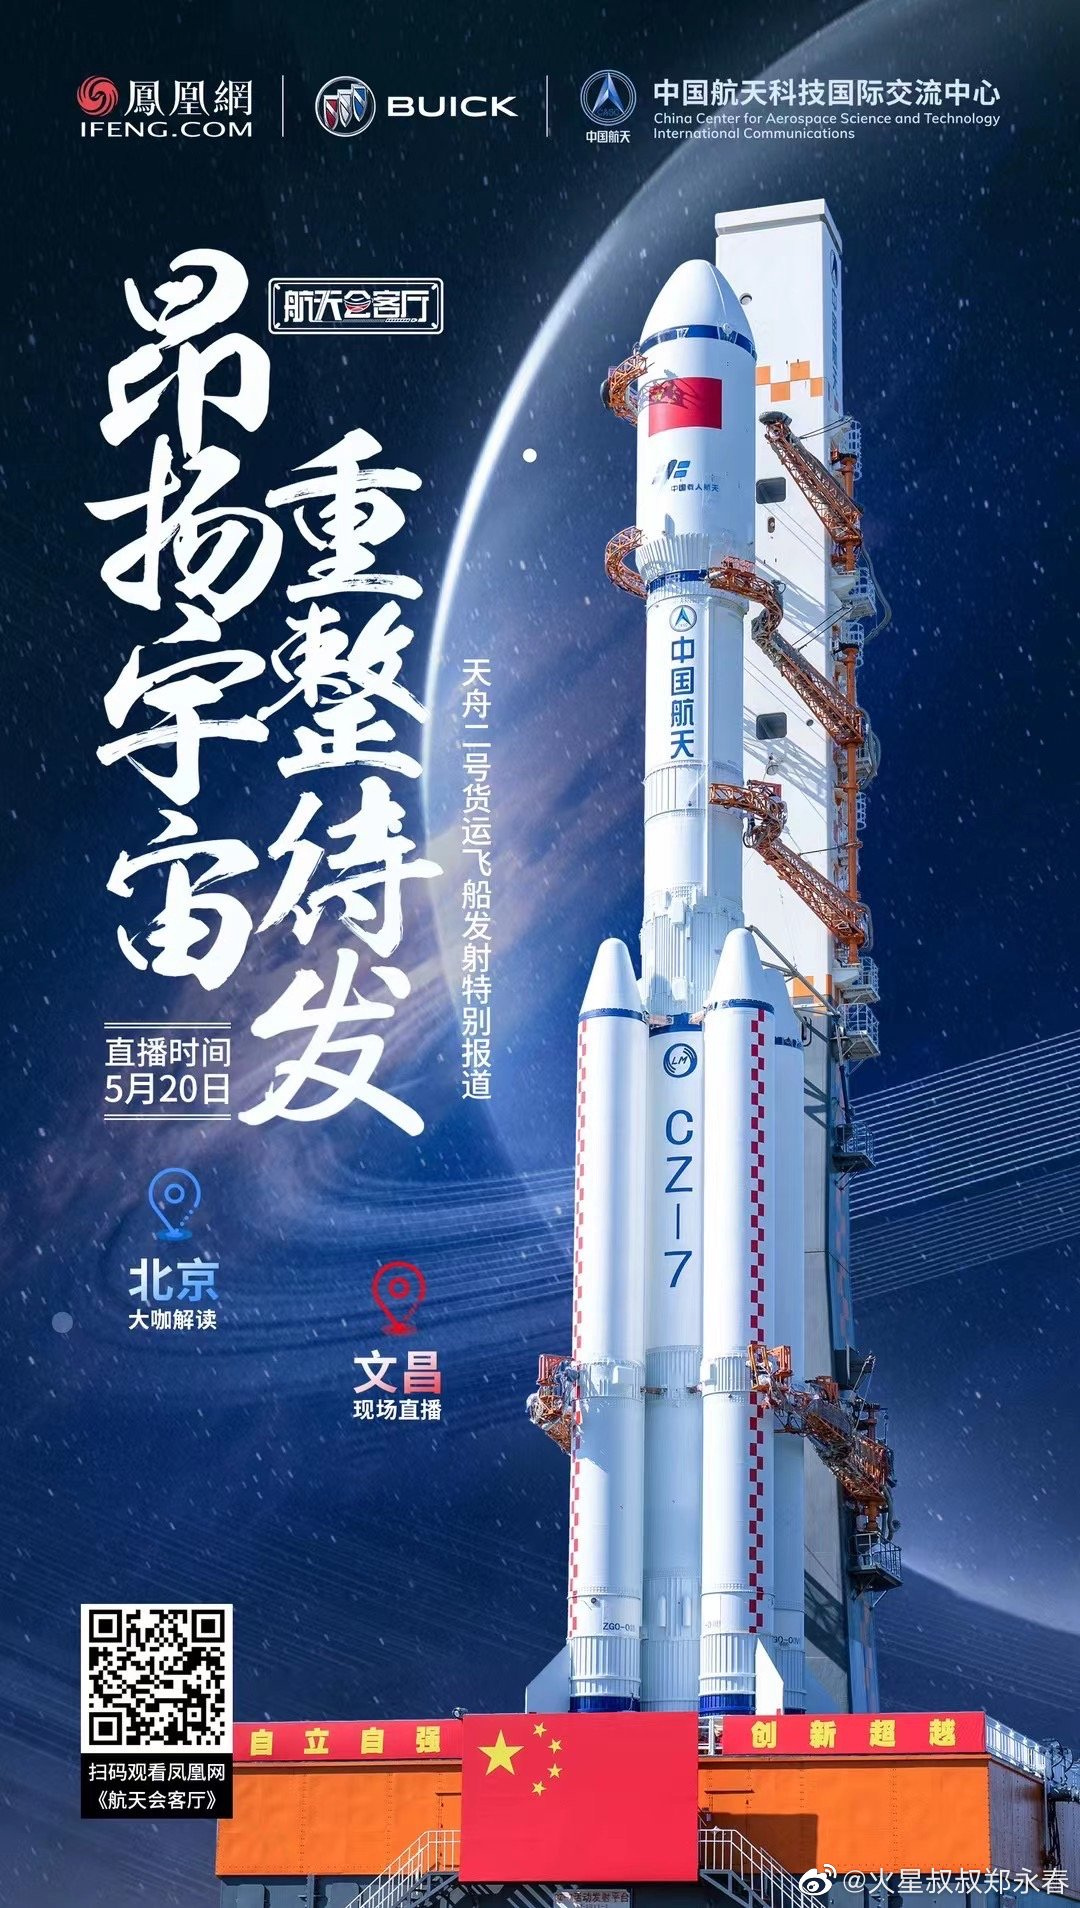 Tianzhou-2_CZ-7-Y3_poster.jpg.8bee0ba4fdf94196fbf3a0f84bb819a1.jpg